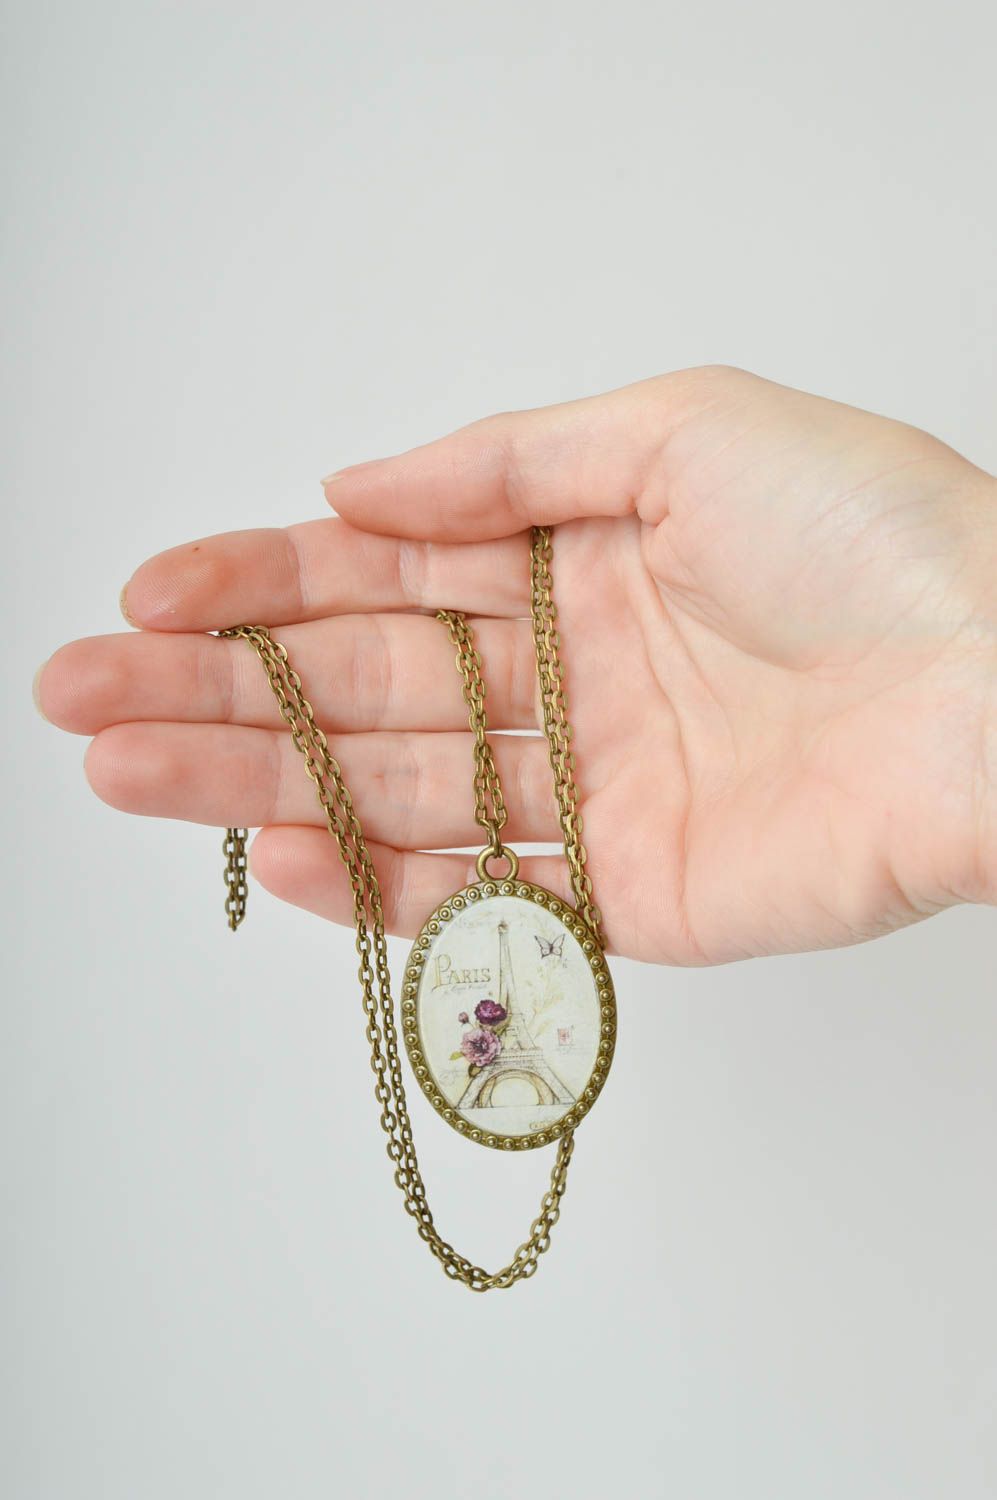 Handmade pendant necklace chain necklace designer jewelry fashion accessories photo 5